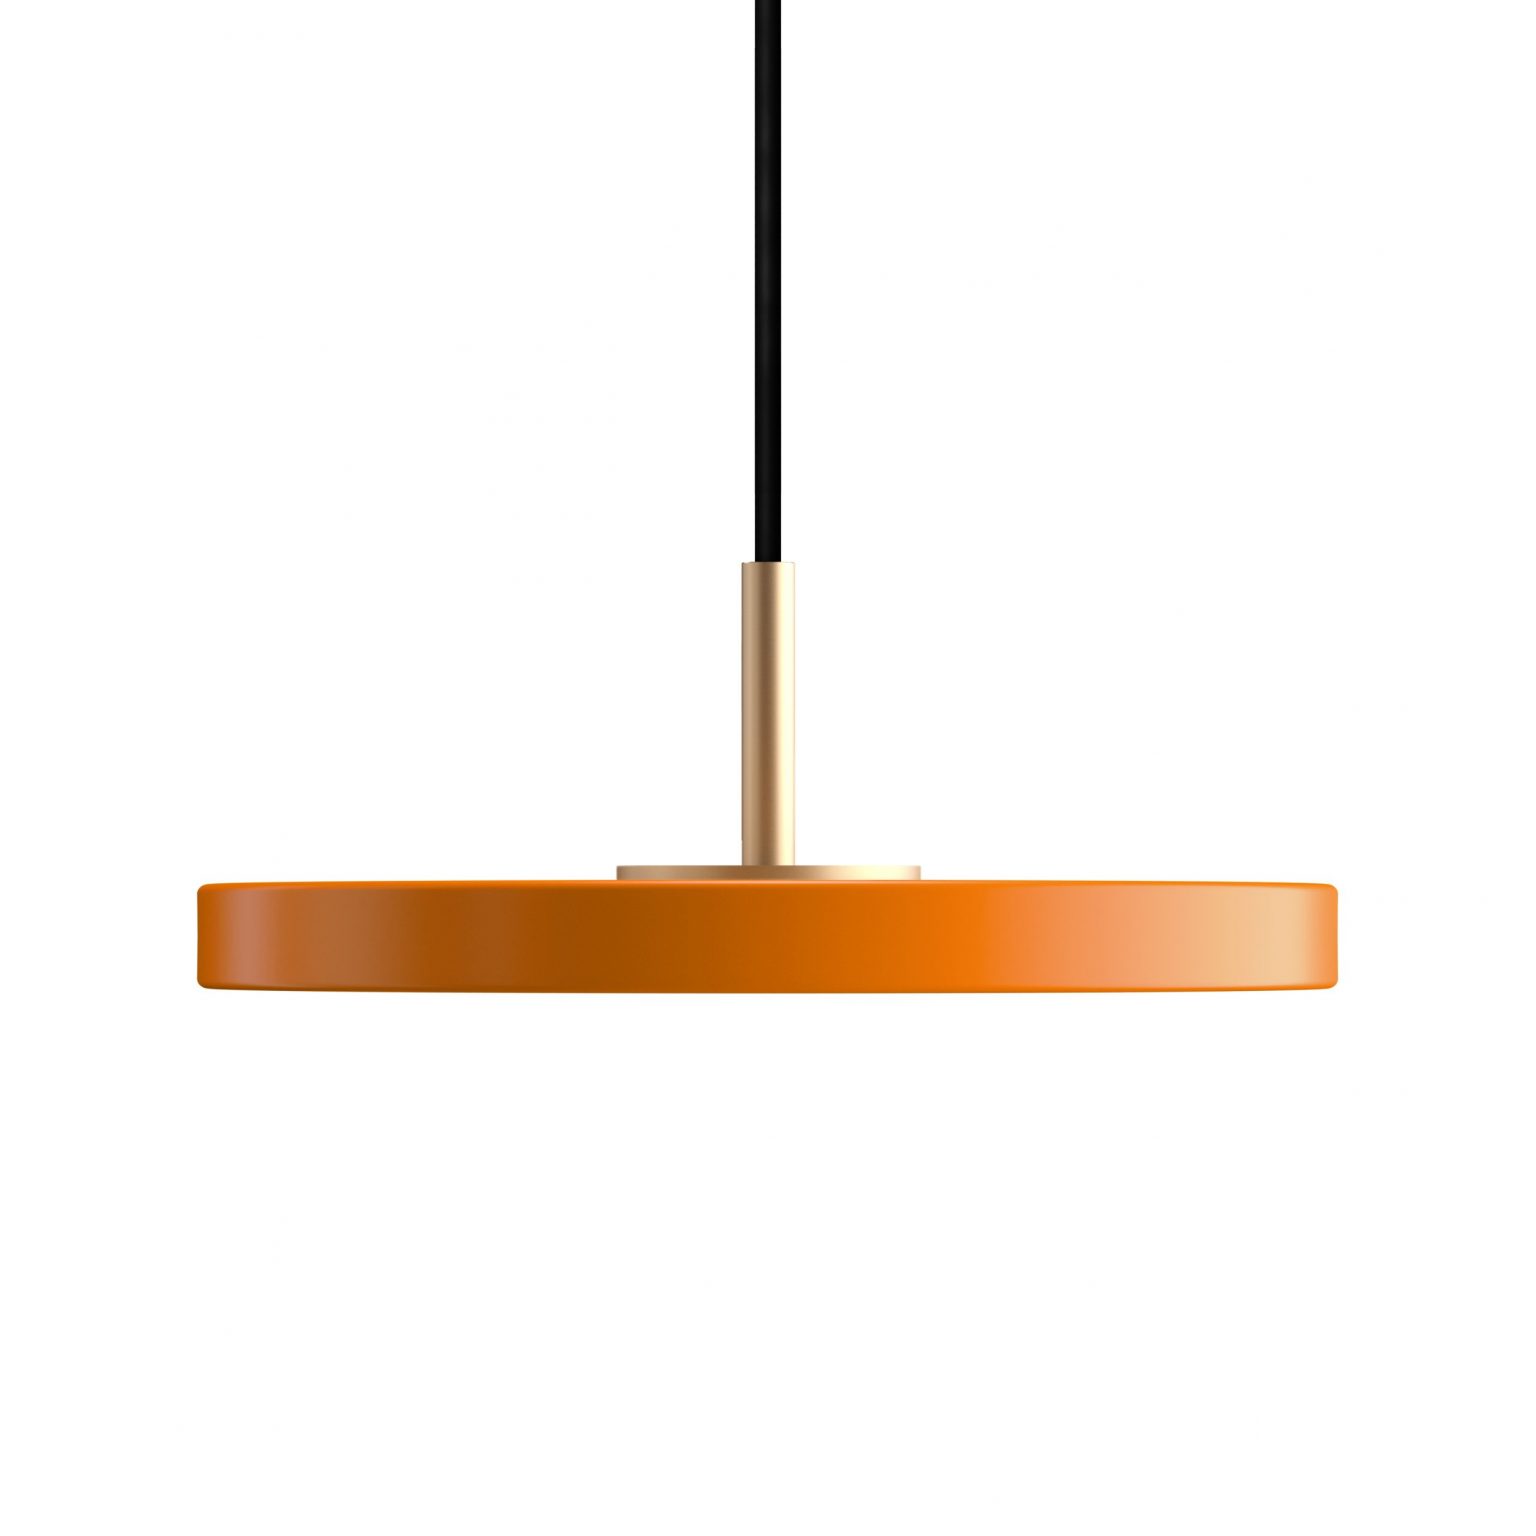 Lampa Asteria micro nuance orange UMAGE - bladopomarańczowa